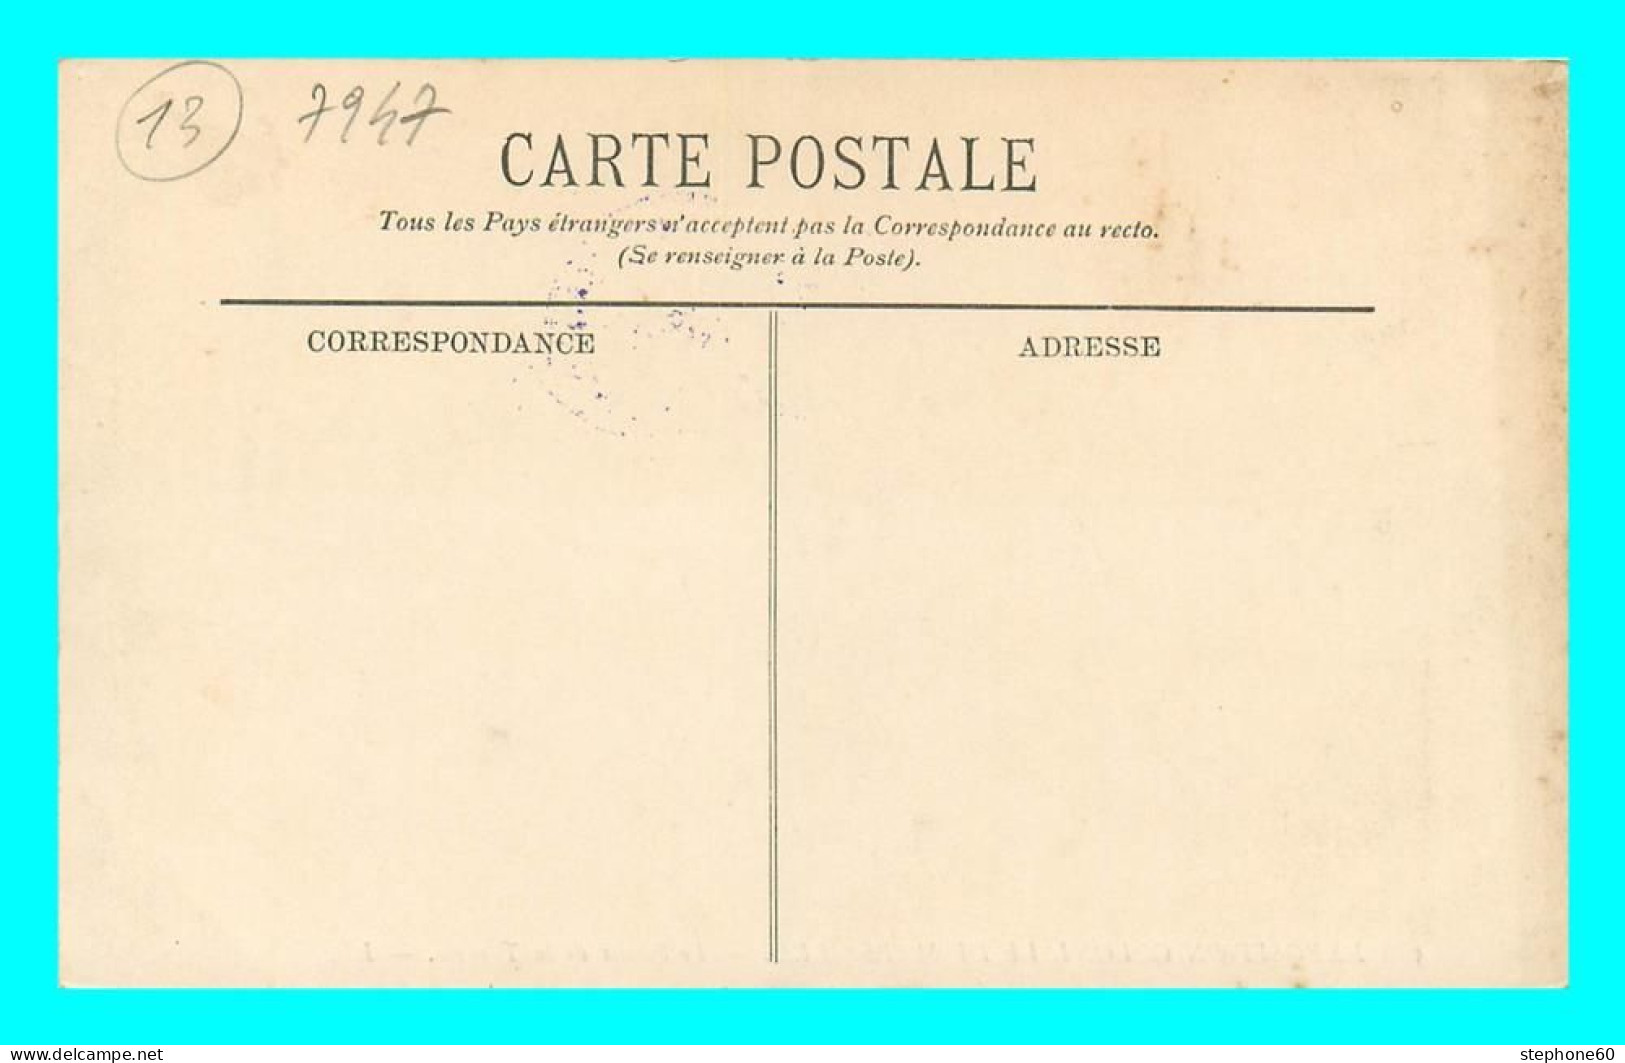 A881 / 219 13 - MARSEILLE Exposition Coloniale Palais De La Tunisie - Kolonialausstellungen 1906 - 1922